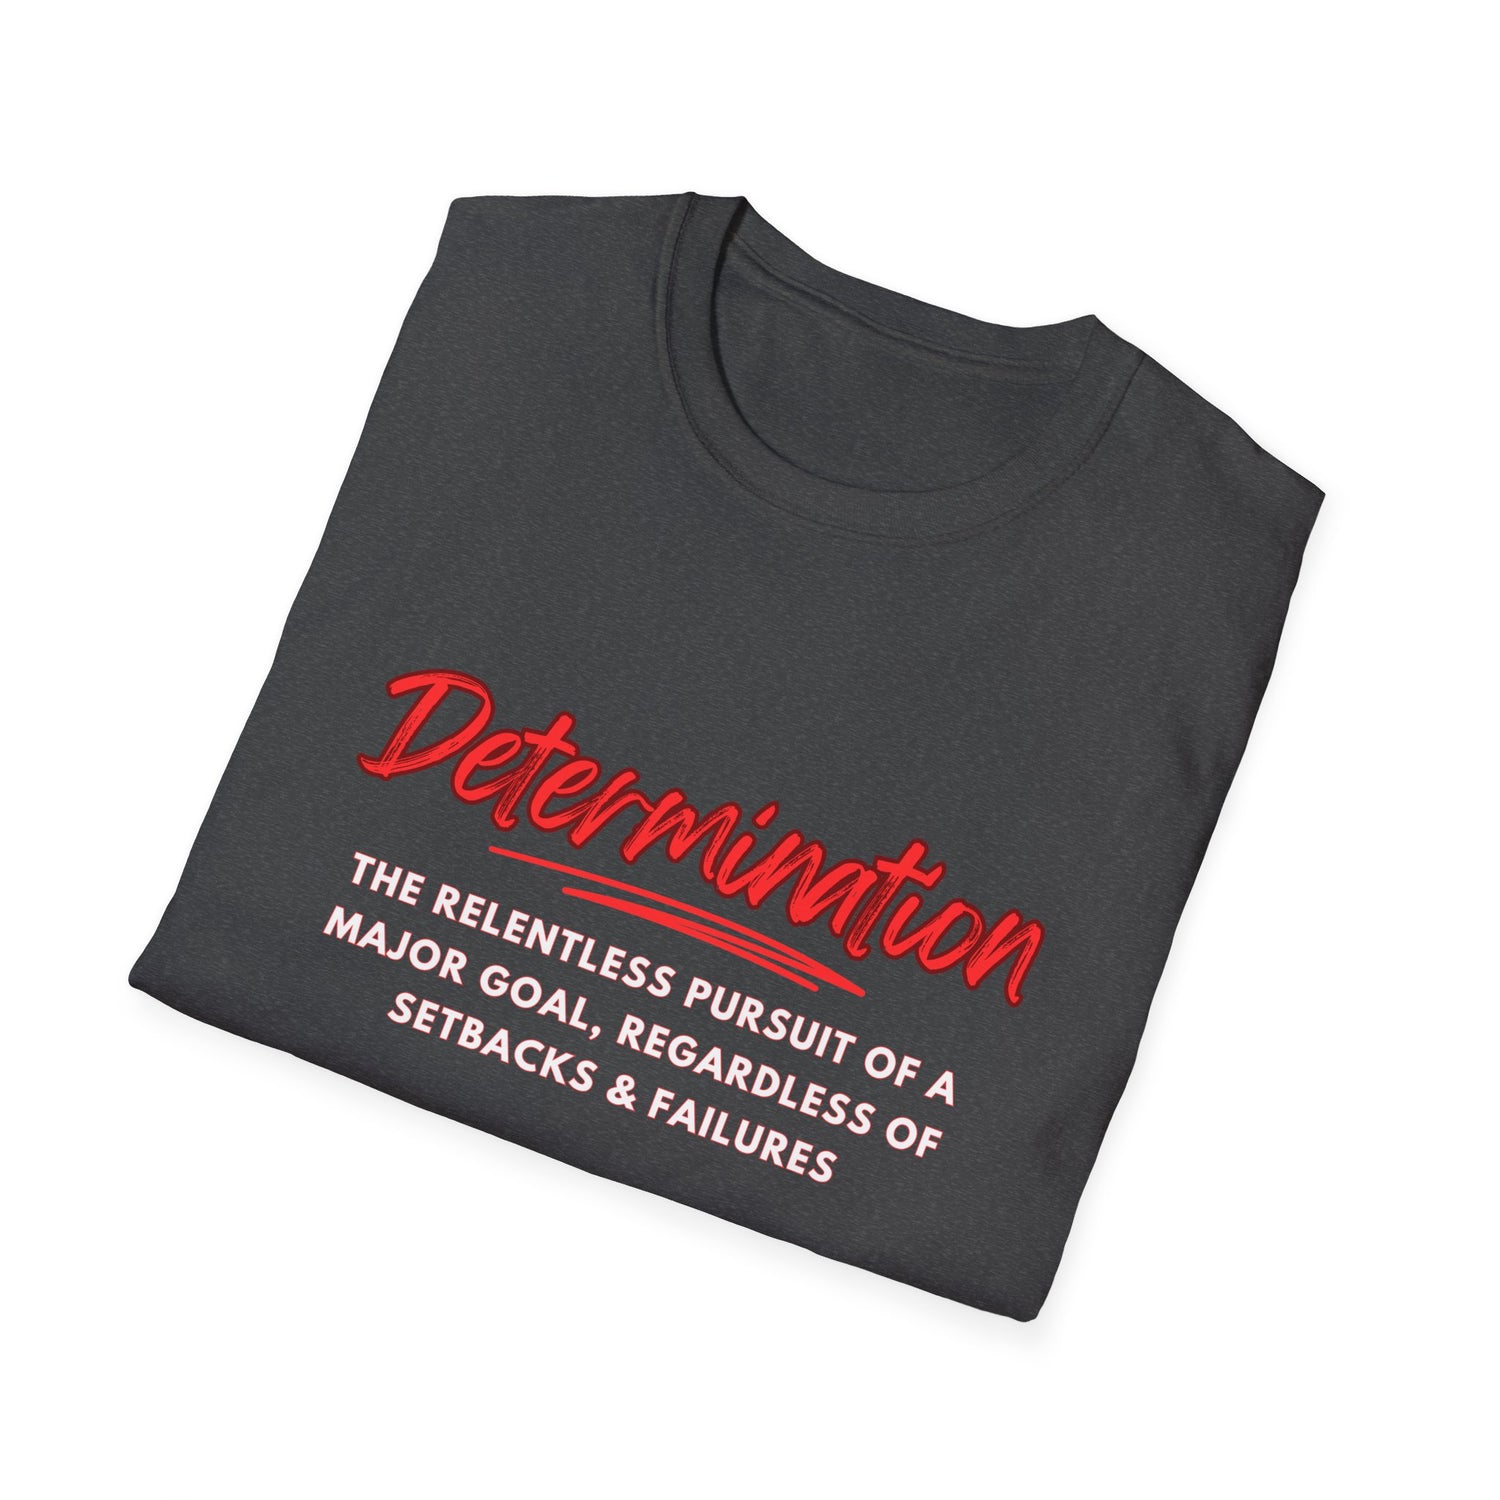 Determination - Unisex Softstyle T-Shirt